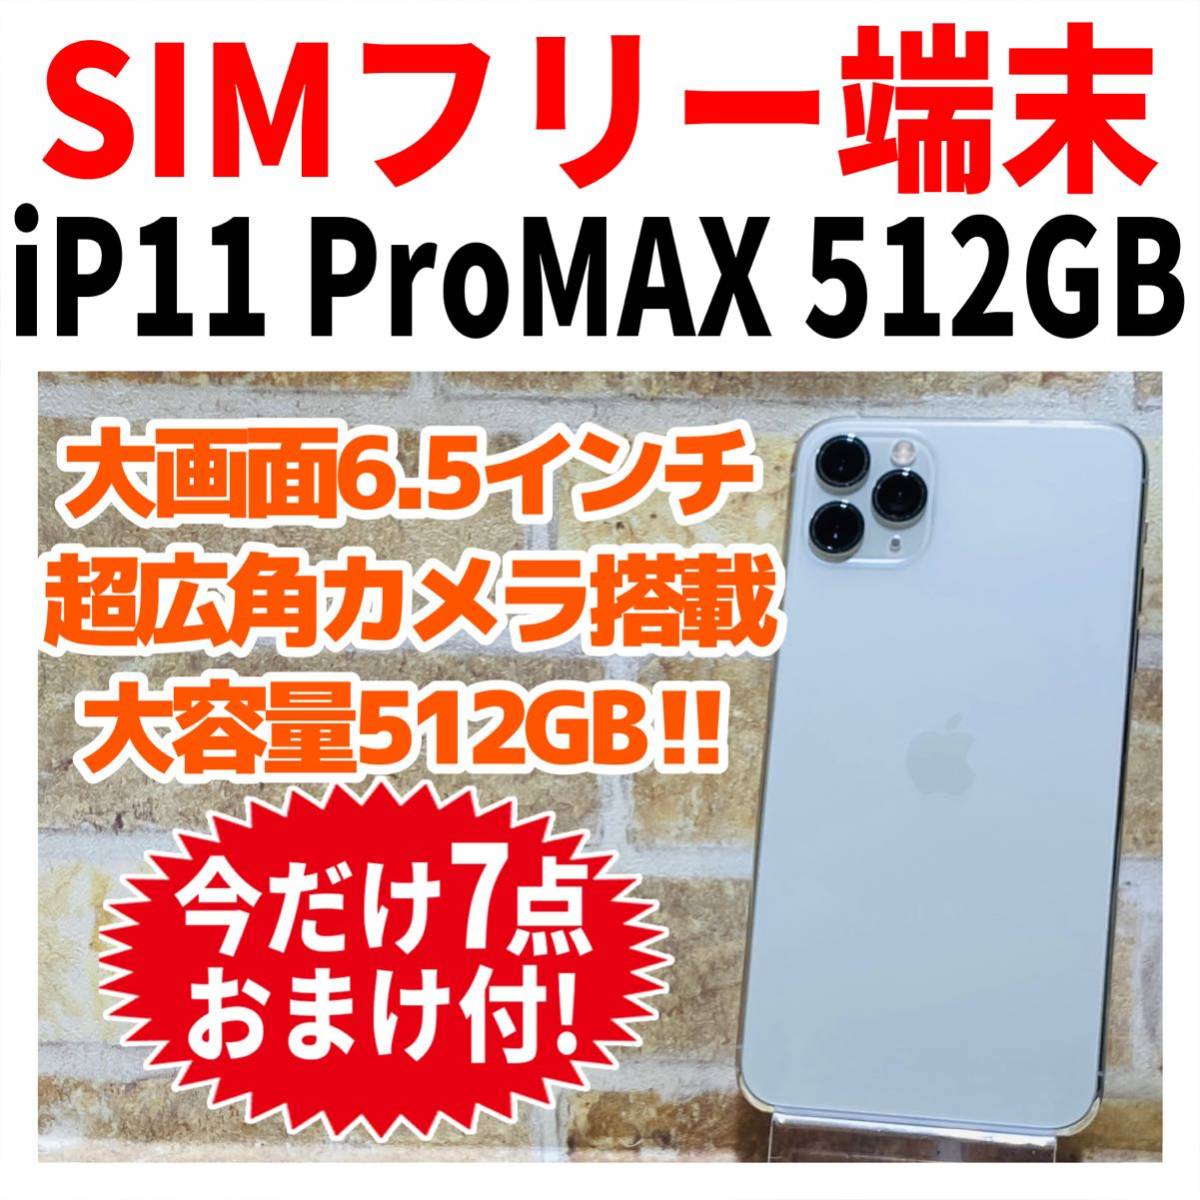 SIMフリー iPhone11ProMax 512GB シルバー 大容量 大画面-